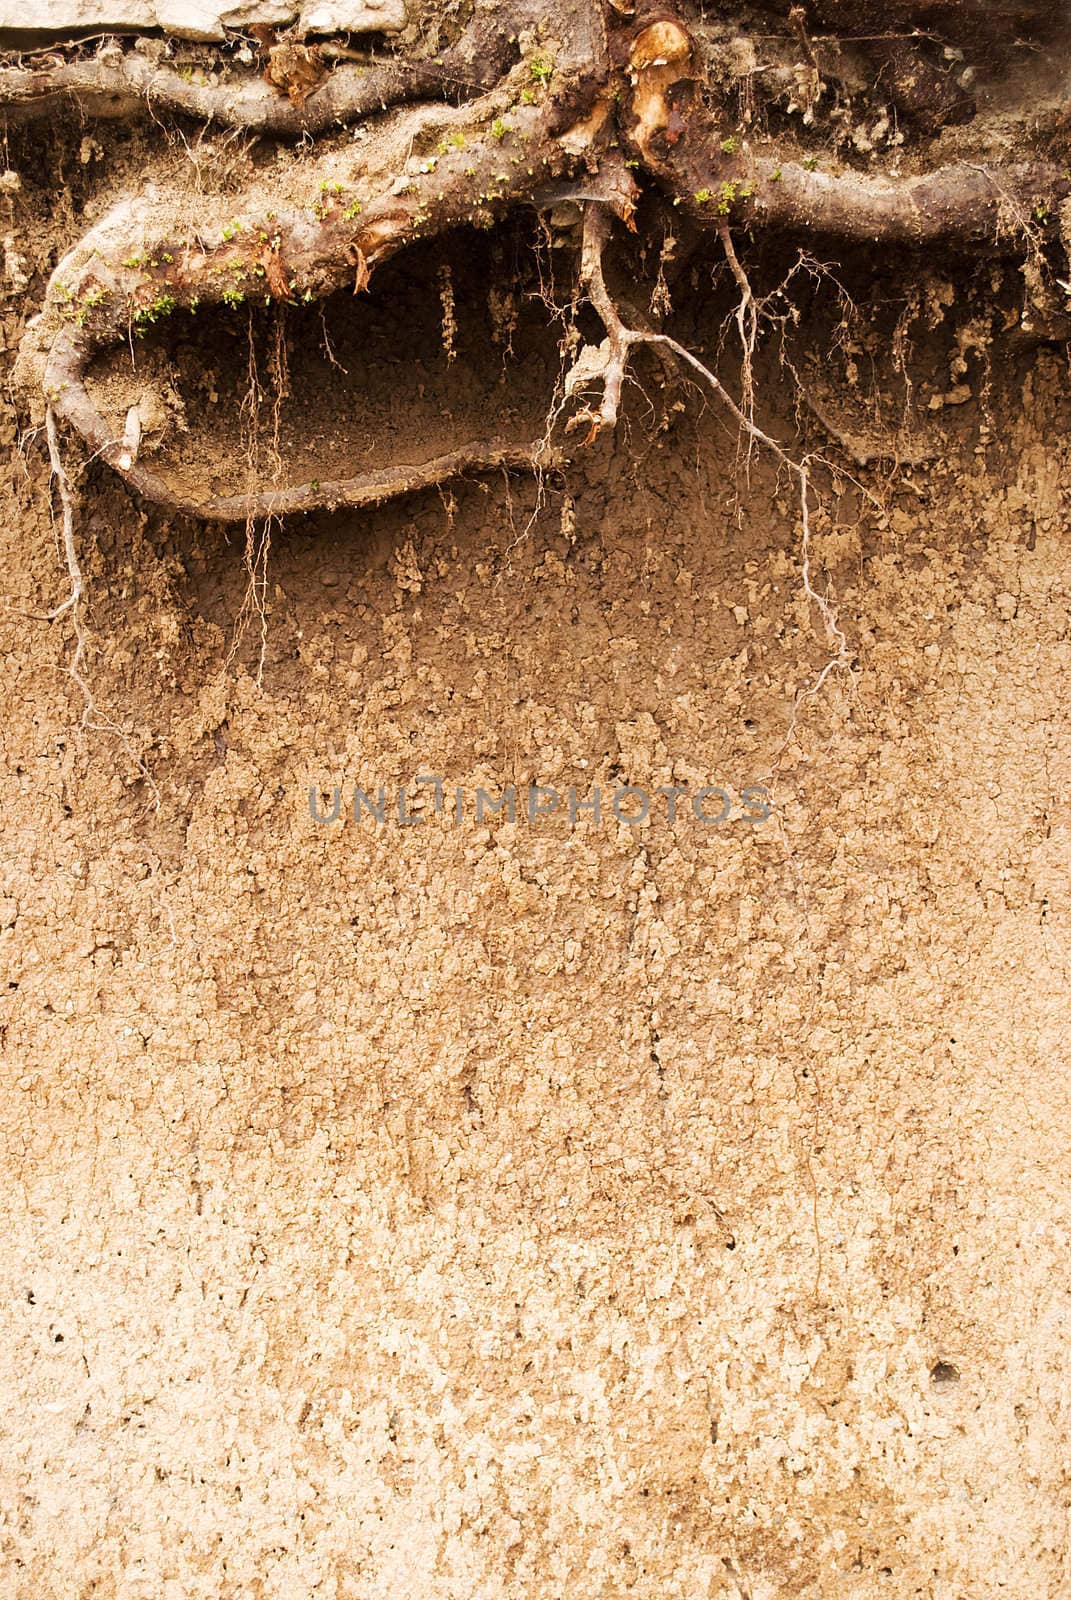 tree roots underground in soil